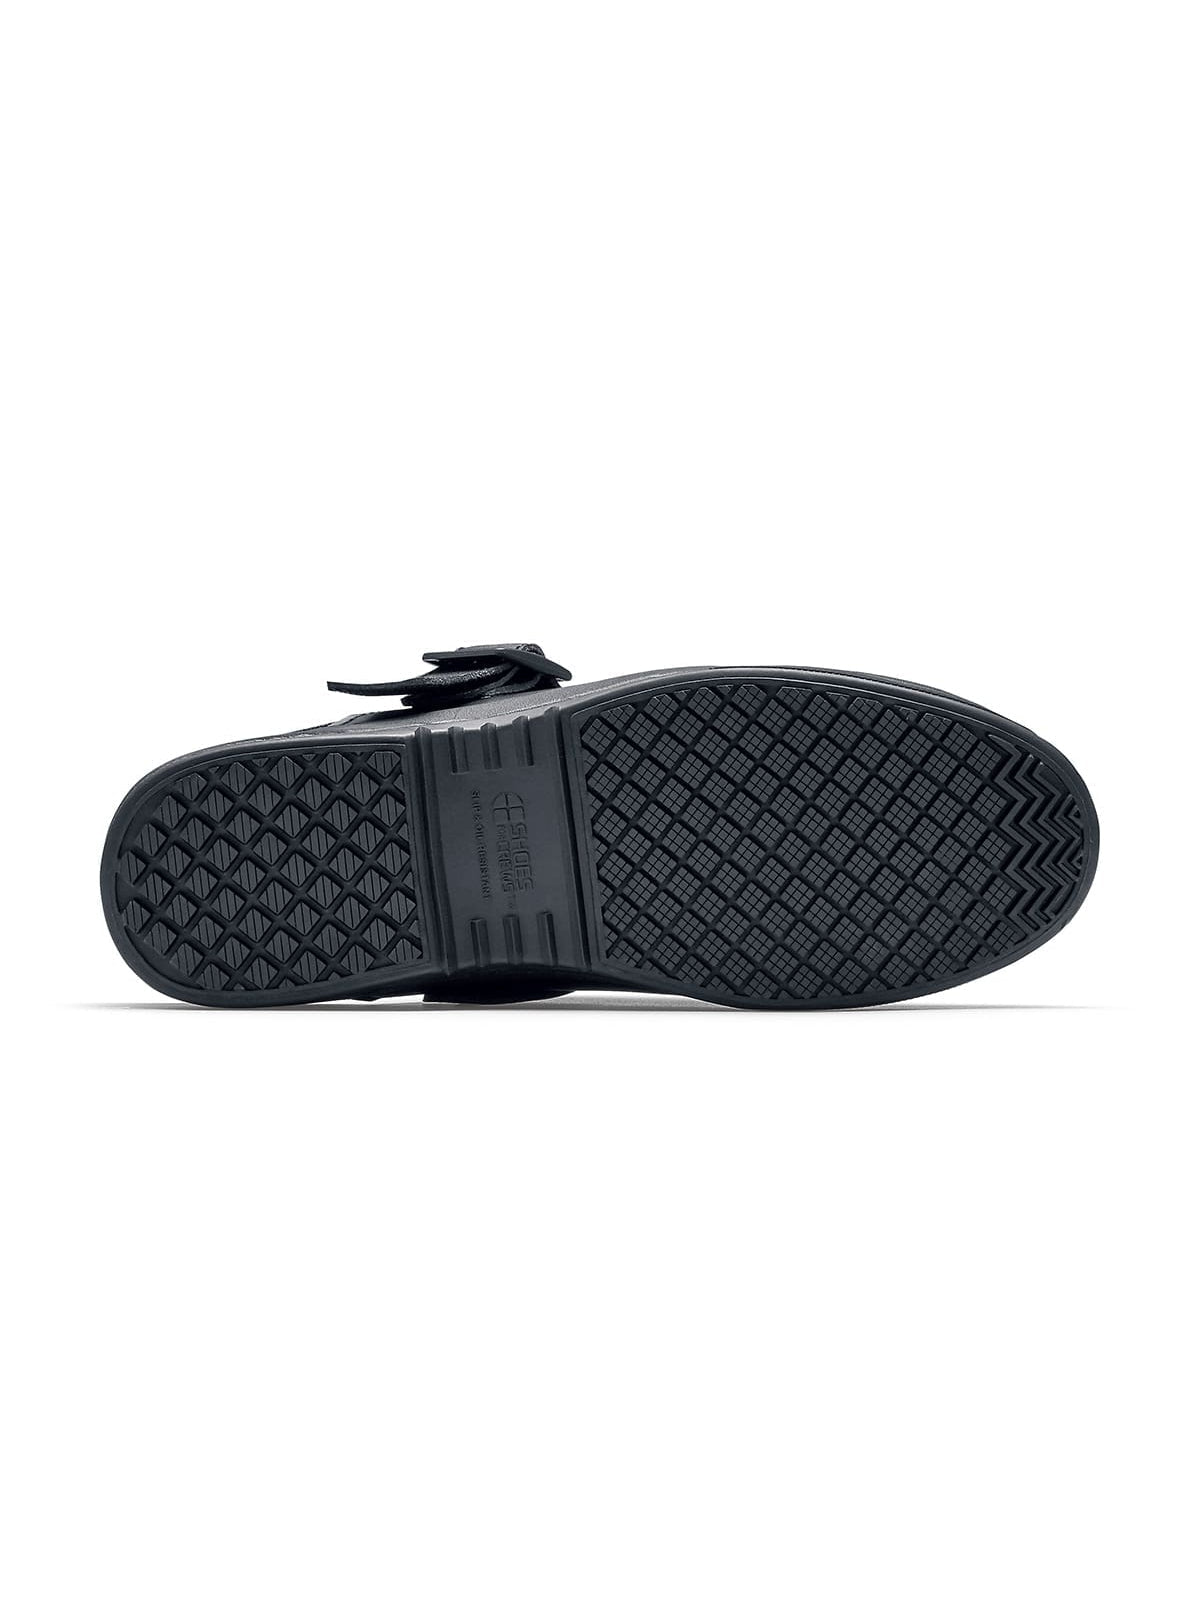 Unisex Work Shoe Triston II SB Black by Shoes For Crews -  ChefsCotton